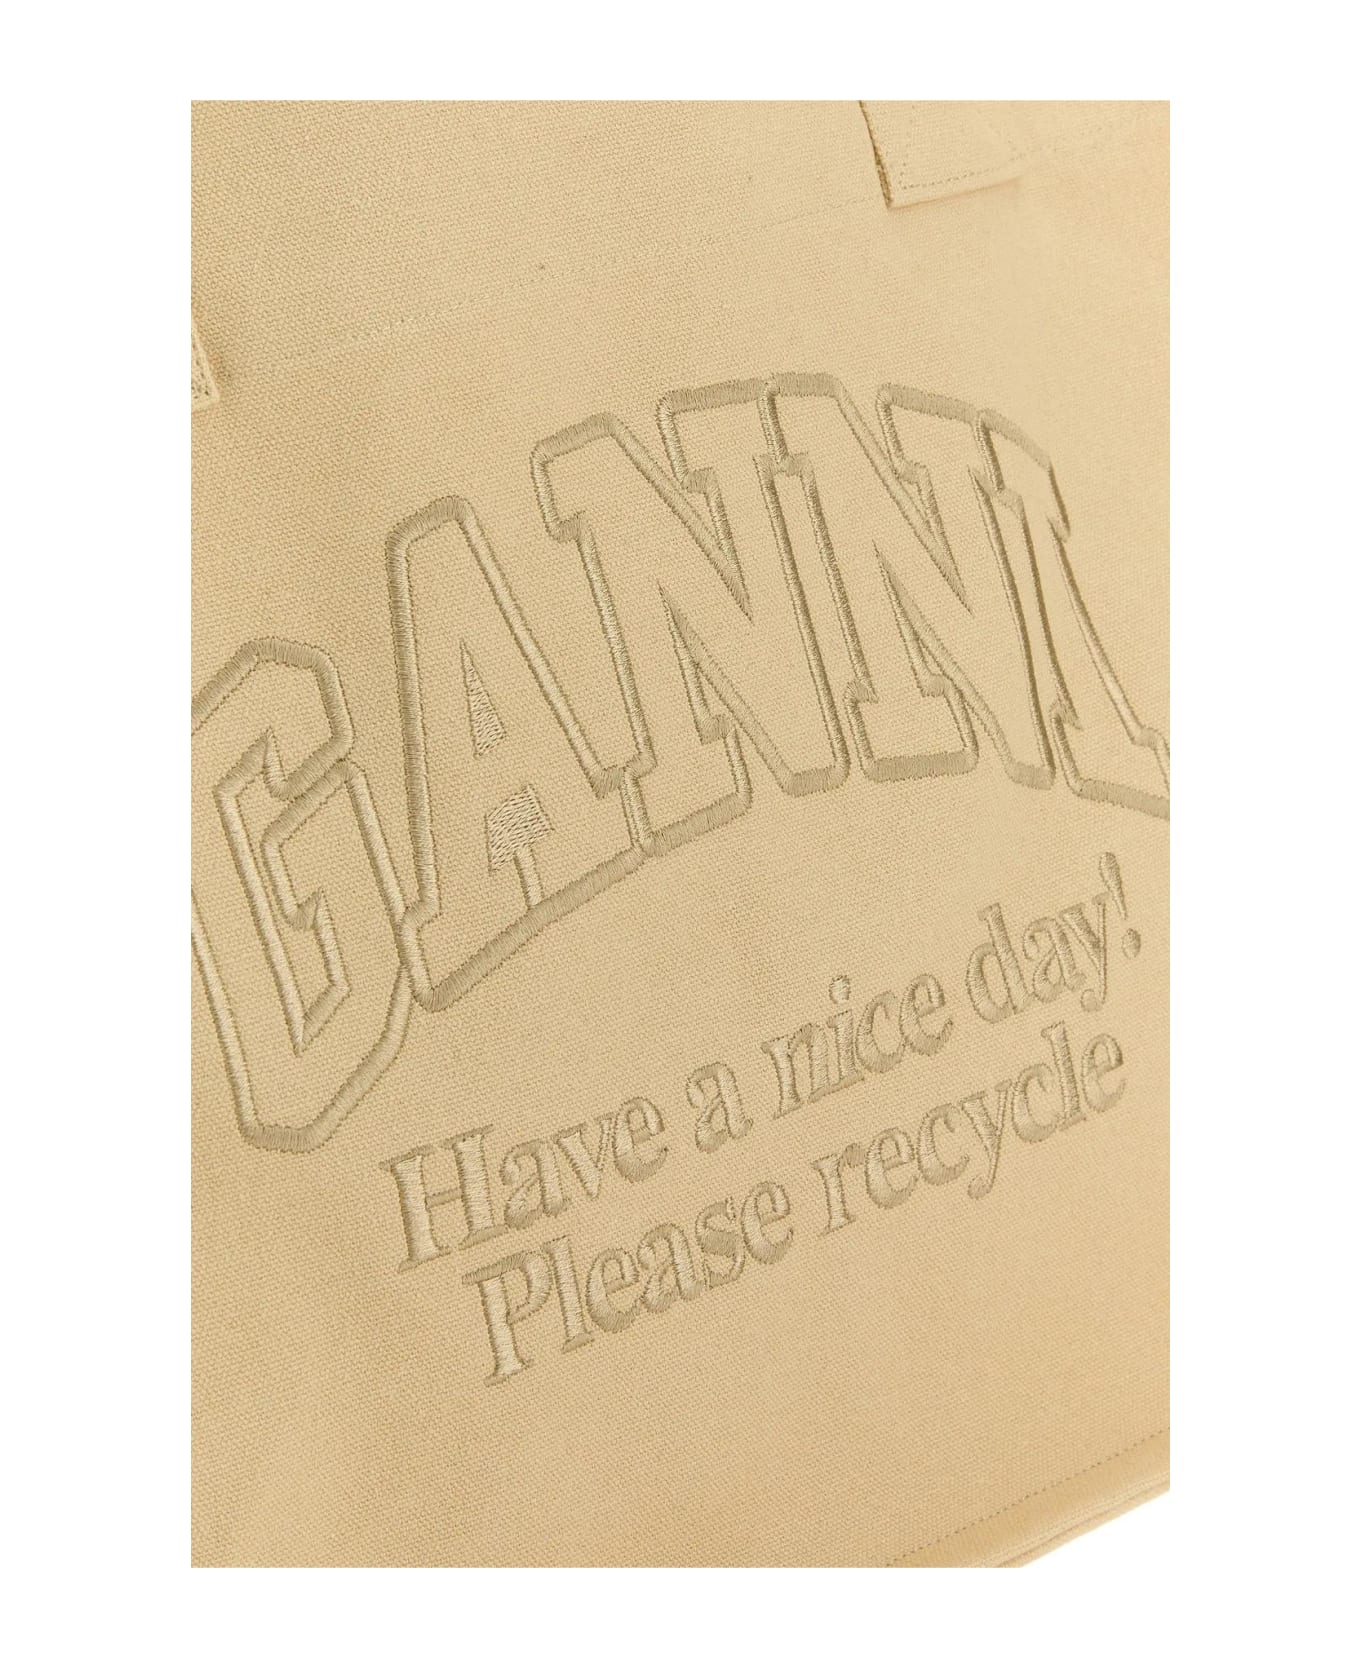 Ganni Cream Canvas Shopping Bag - Buttercream